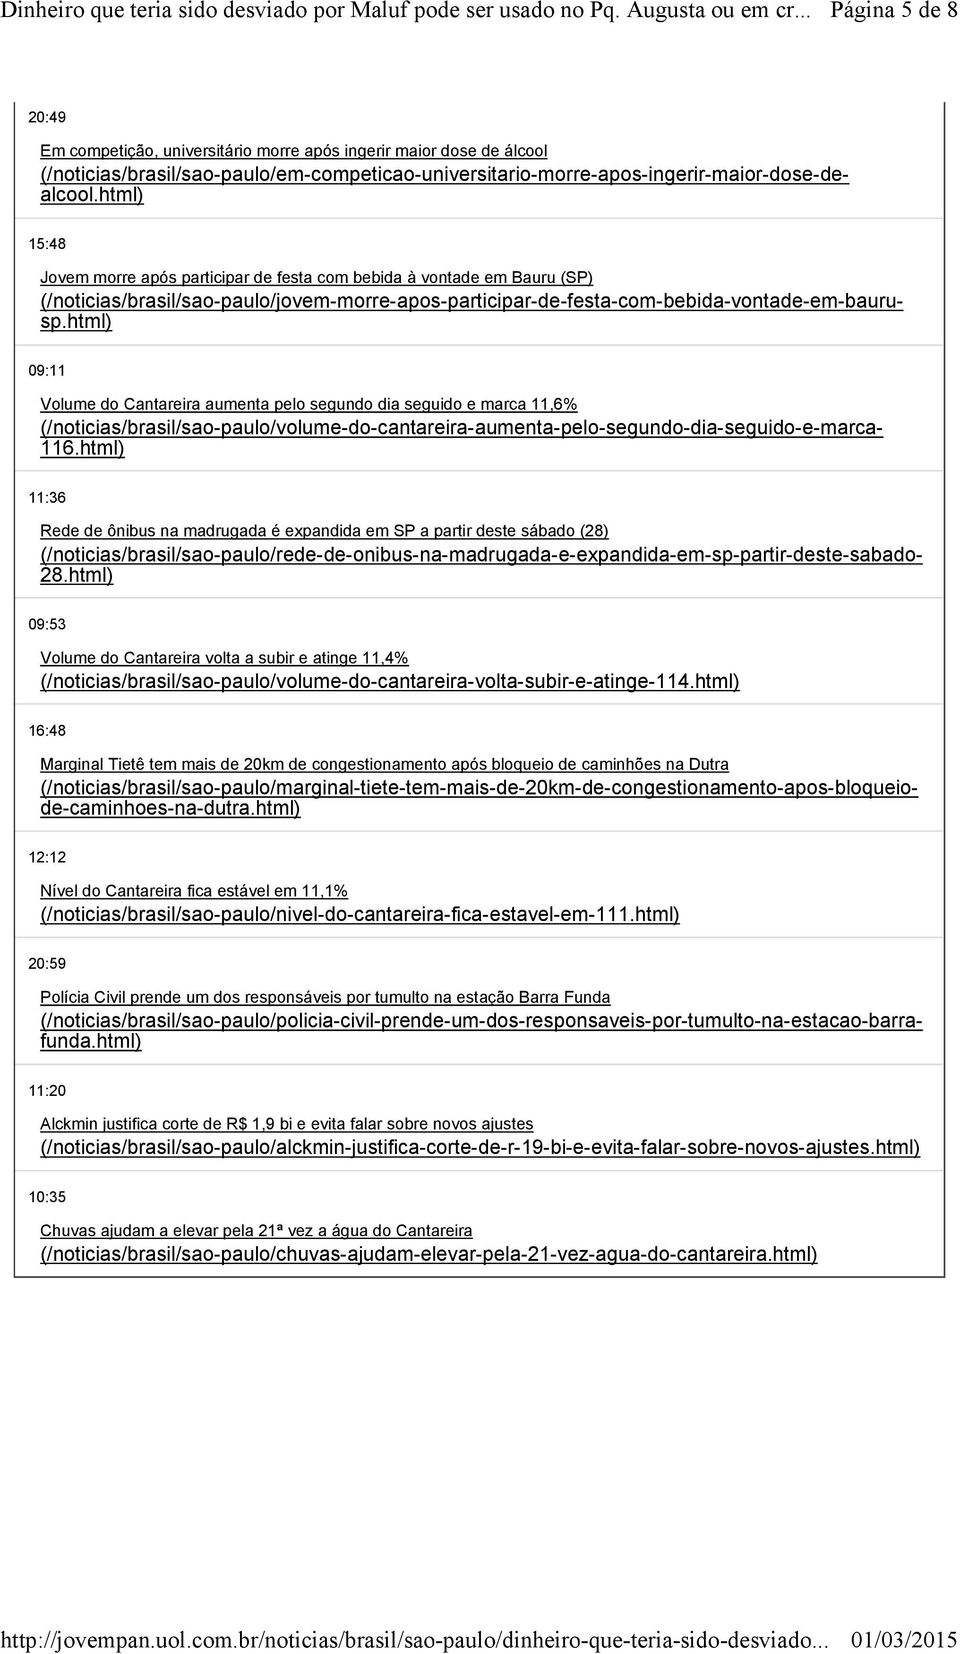 html) 09:11 Volume do Cantareira aumenta pelo segundo dia seguido e marca 11,6% (/noticias/brasil/sao-paulo/volume-do-cantareira-aumenta-pelo-segundo-dia-seguido-e-marca- 116.